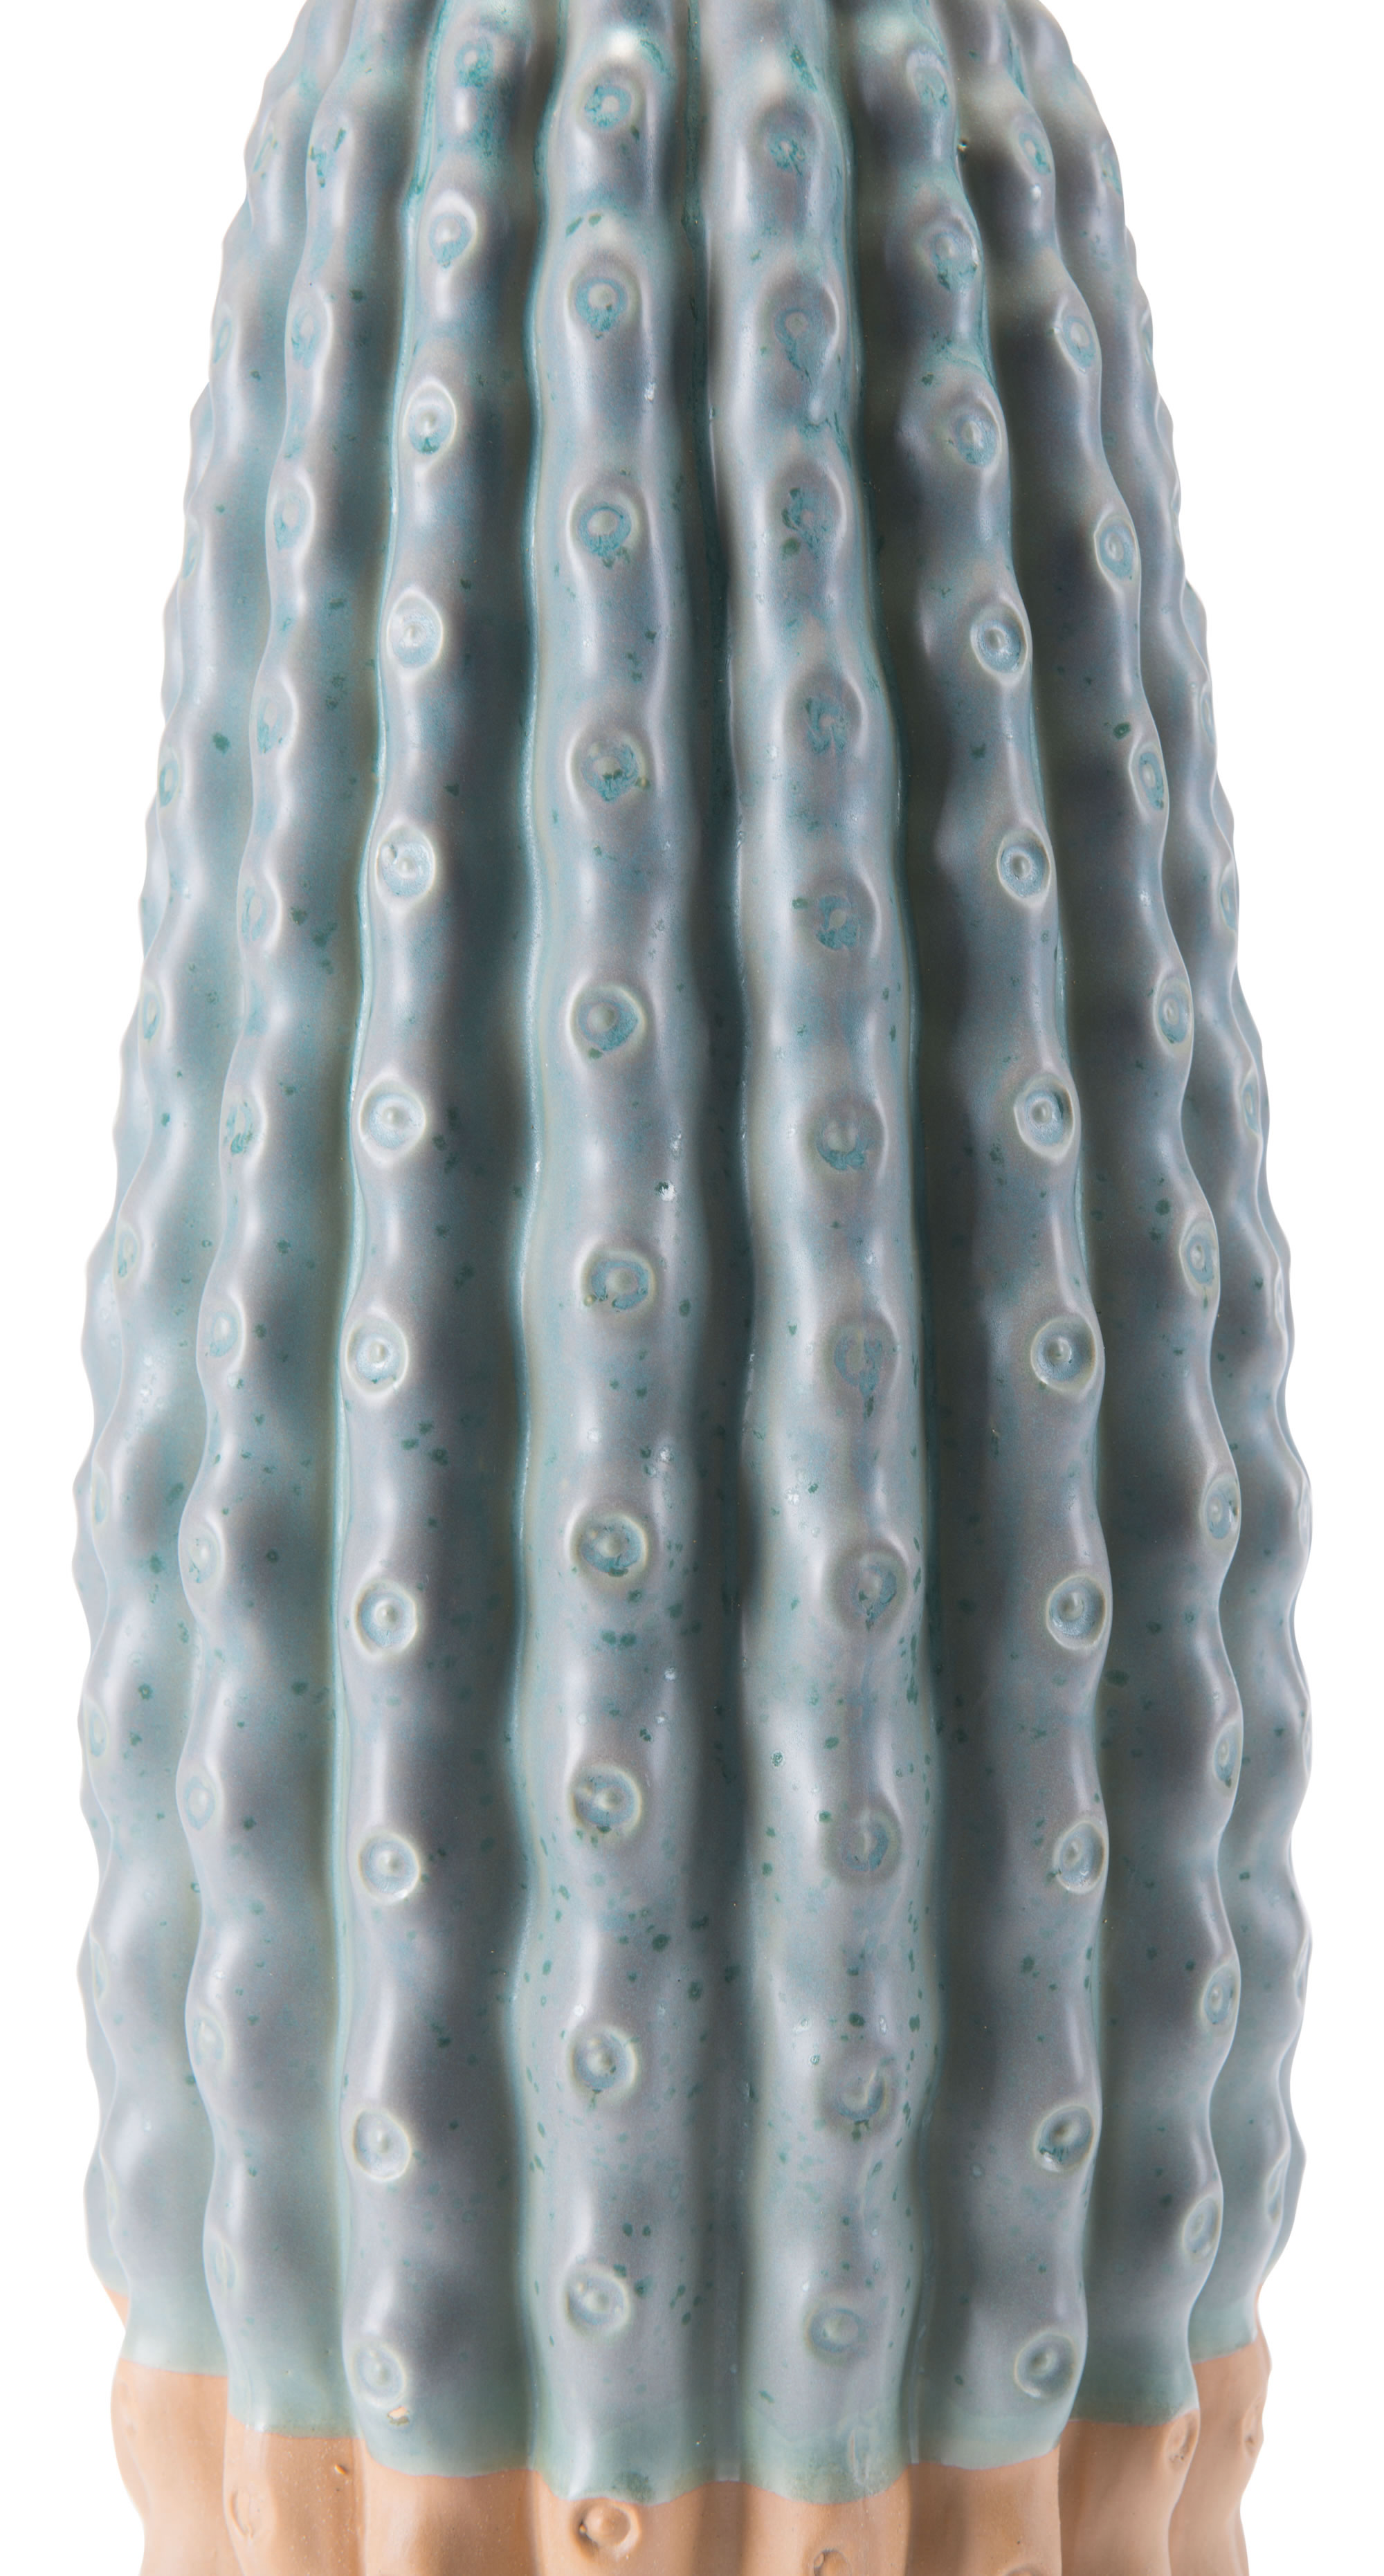 8.3" x 8.3" x 21.3" Green Ceramic Large Vase